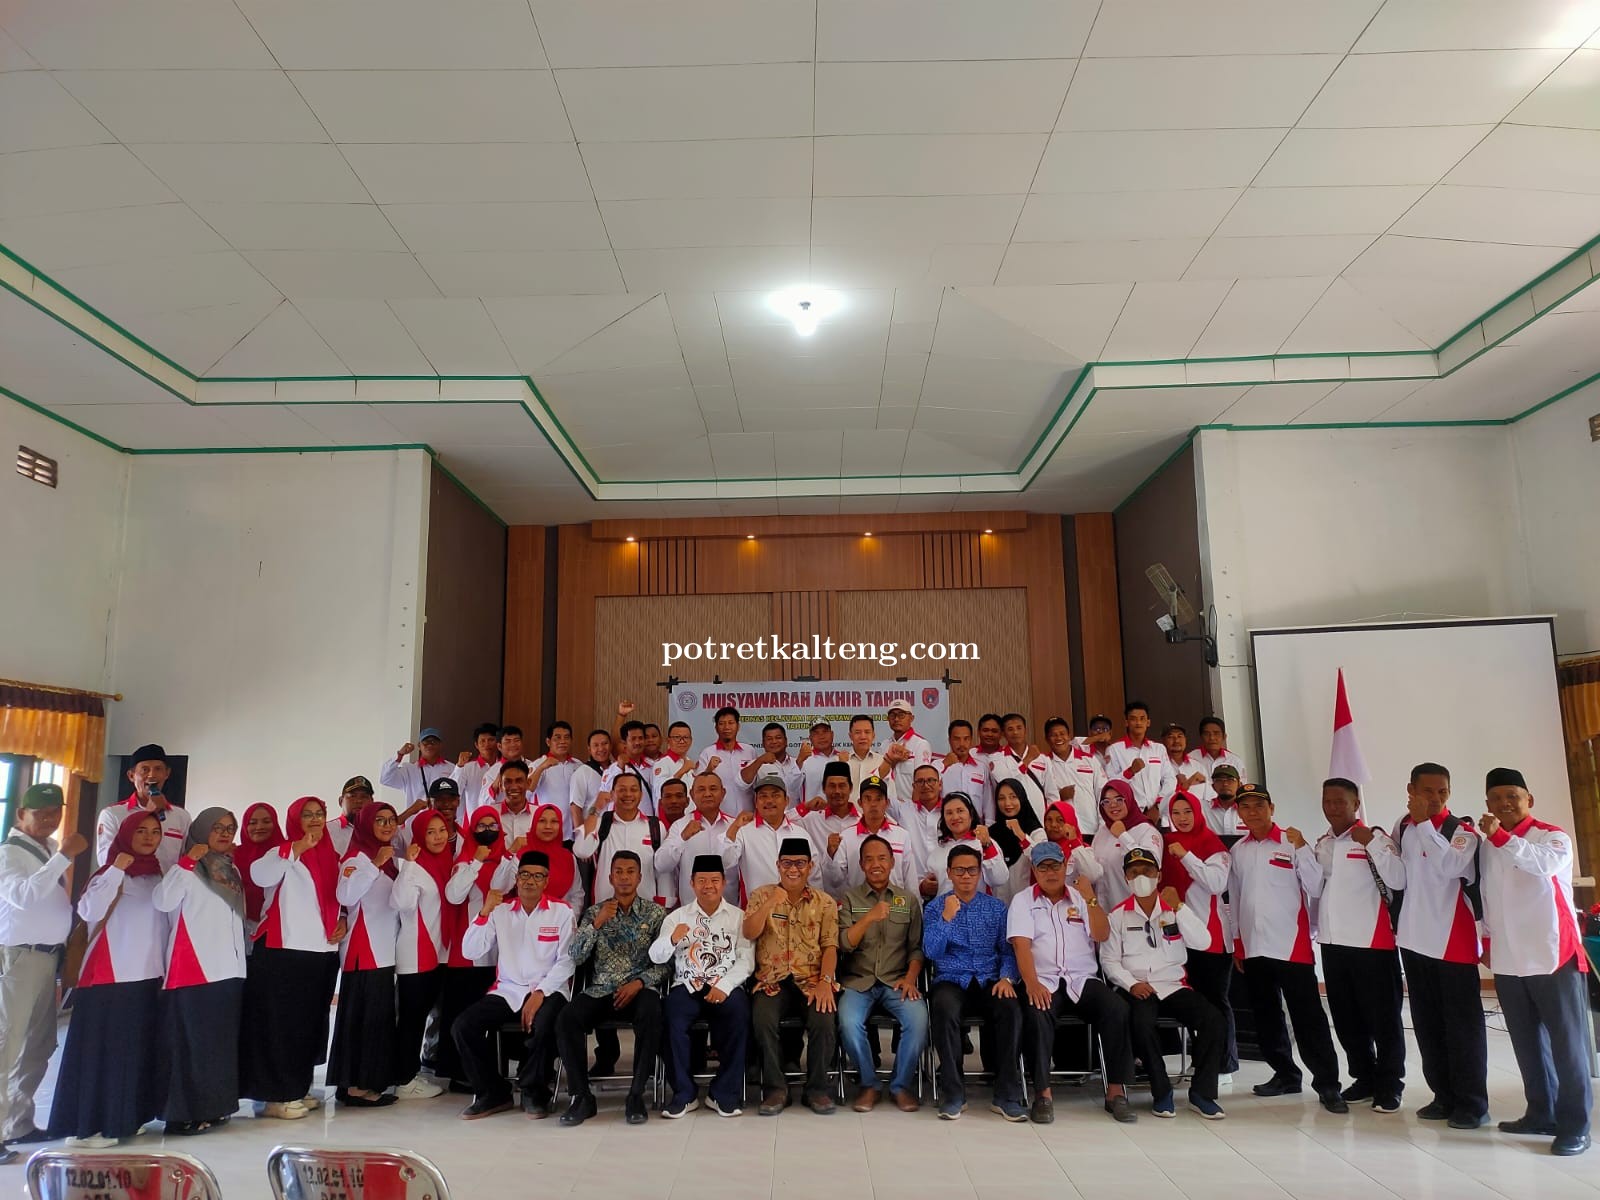 Hadiri Musyawarah Akhir Tahun Bambang Purwanto: BPD adalah Mitra Strategis Wujudkan Kemandirian Desa